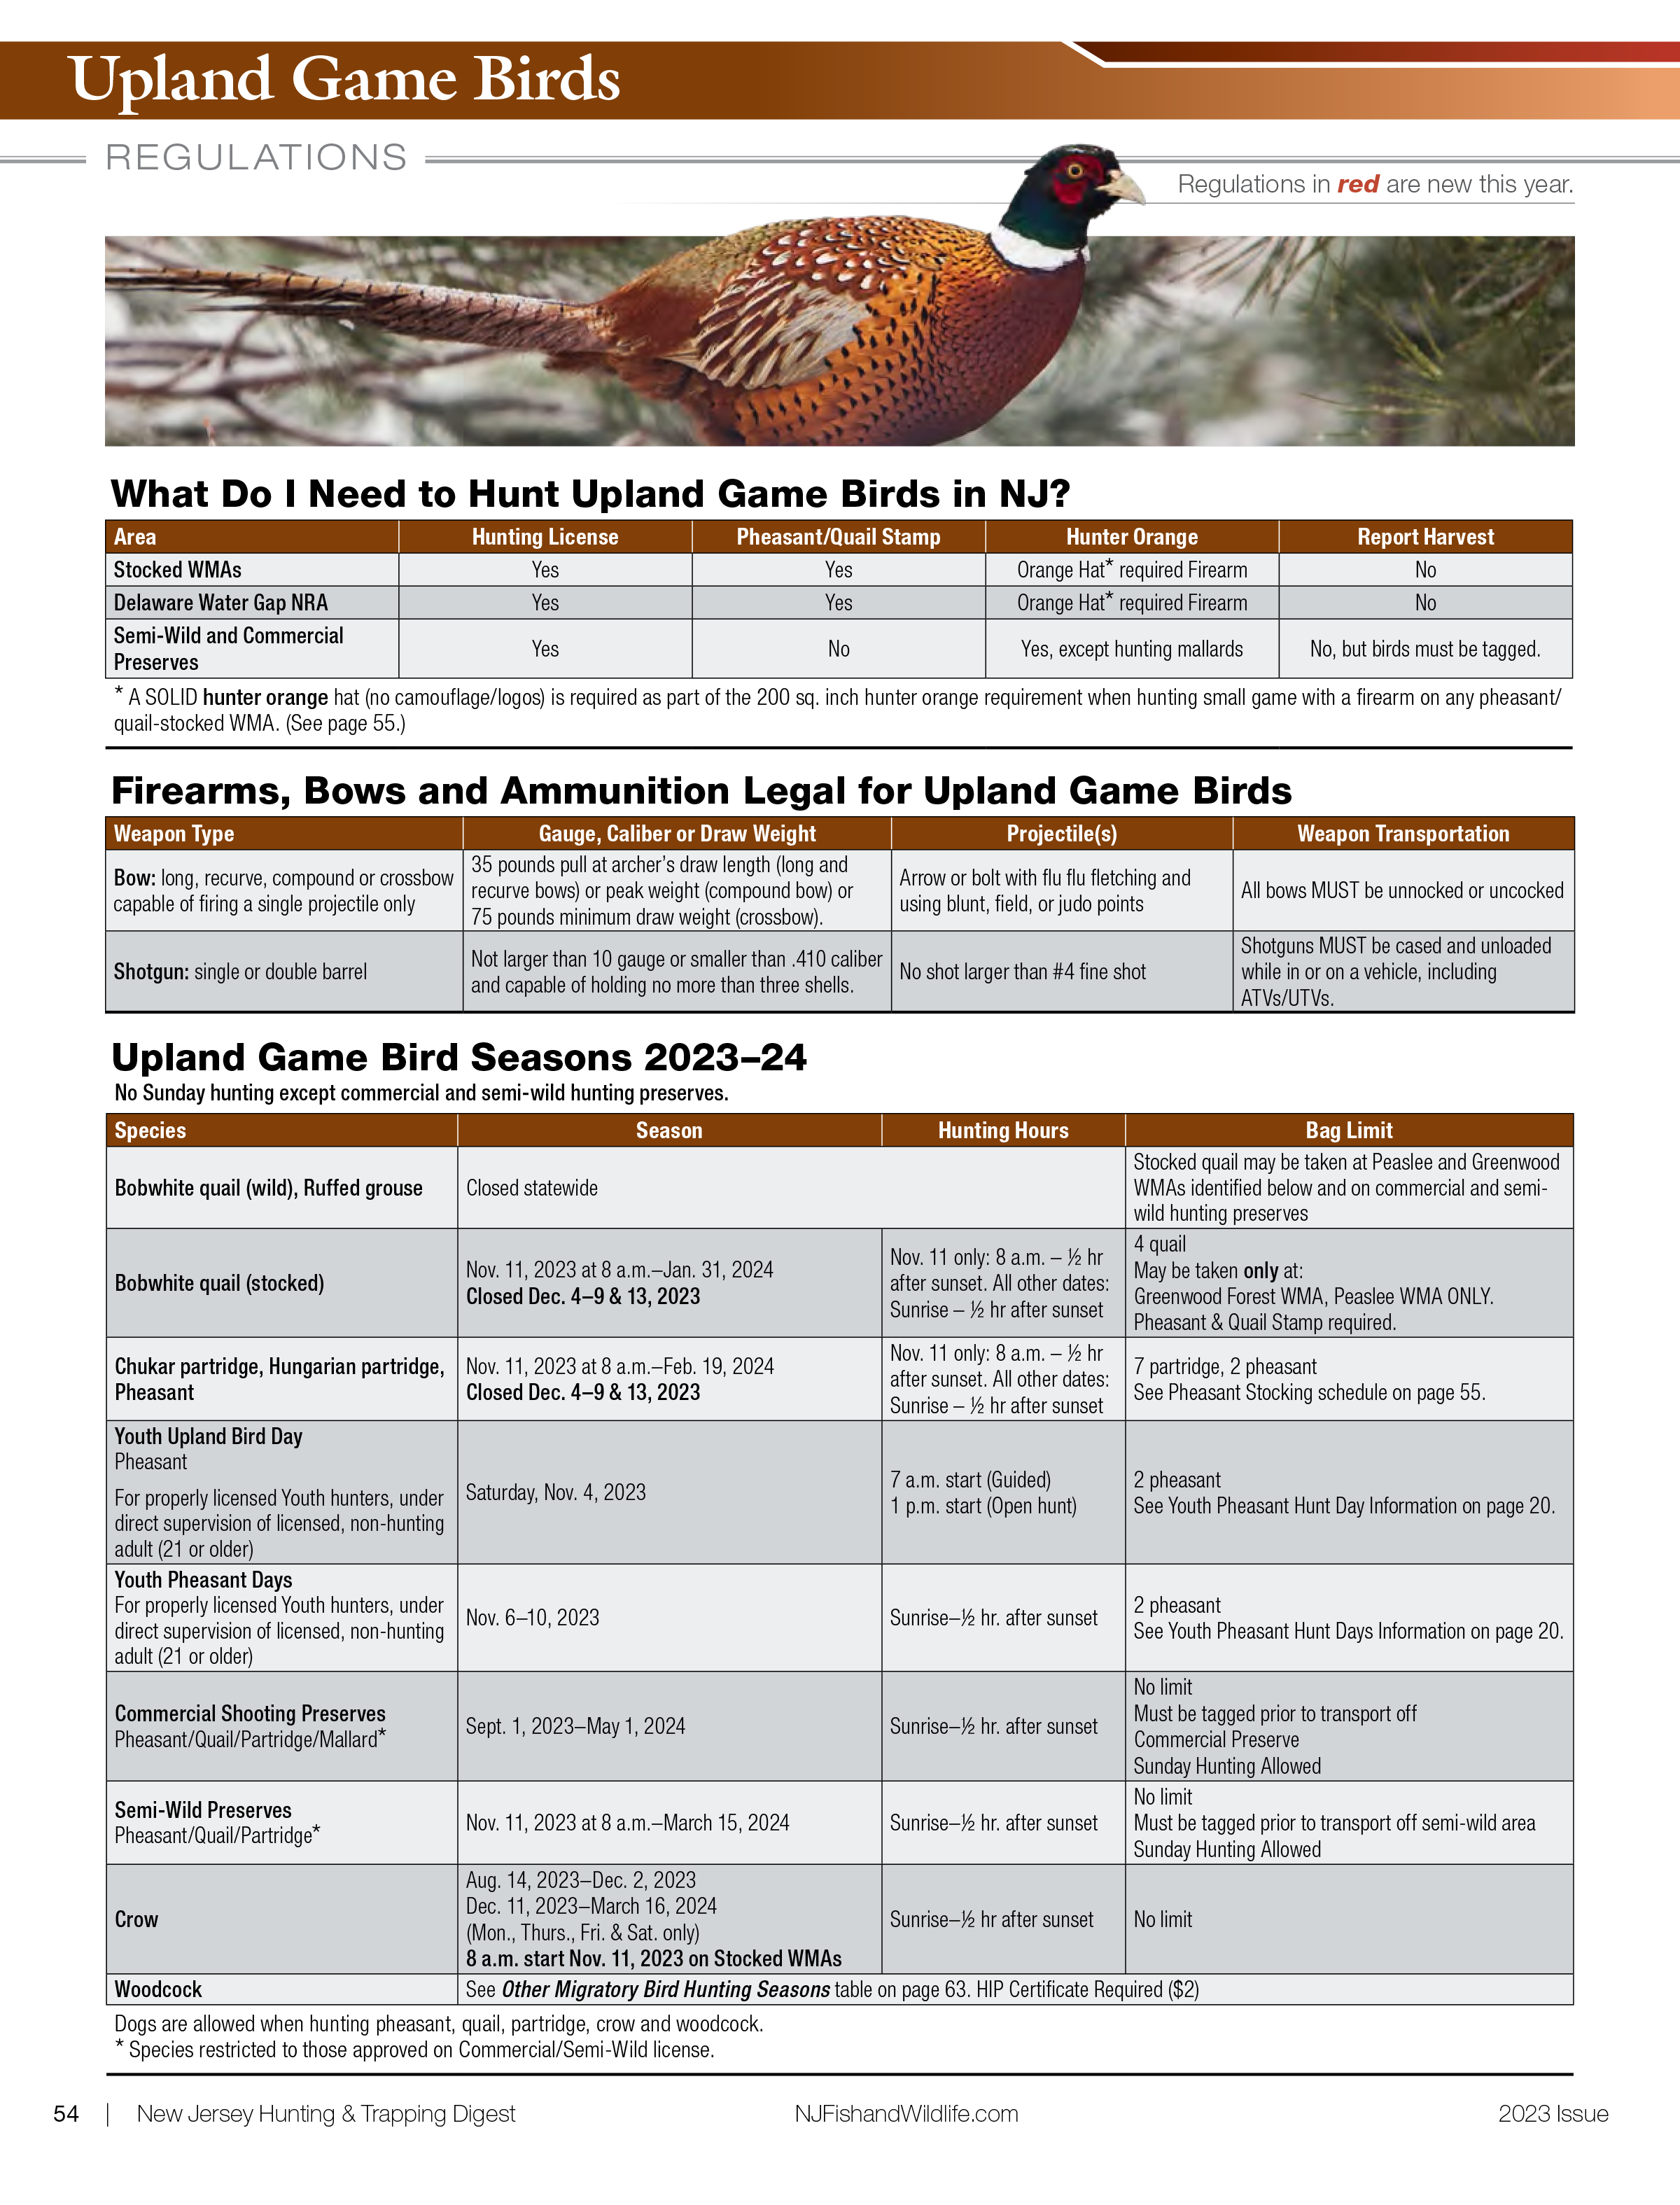 NJDEP Fish and Wildlife Upland Game Bird Season and Regulations